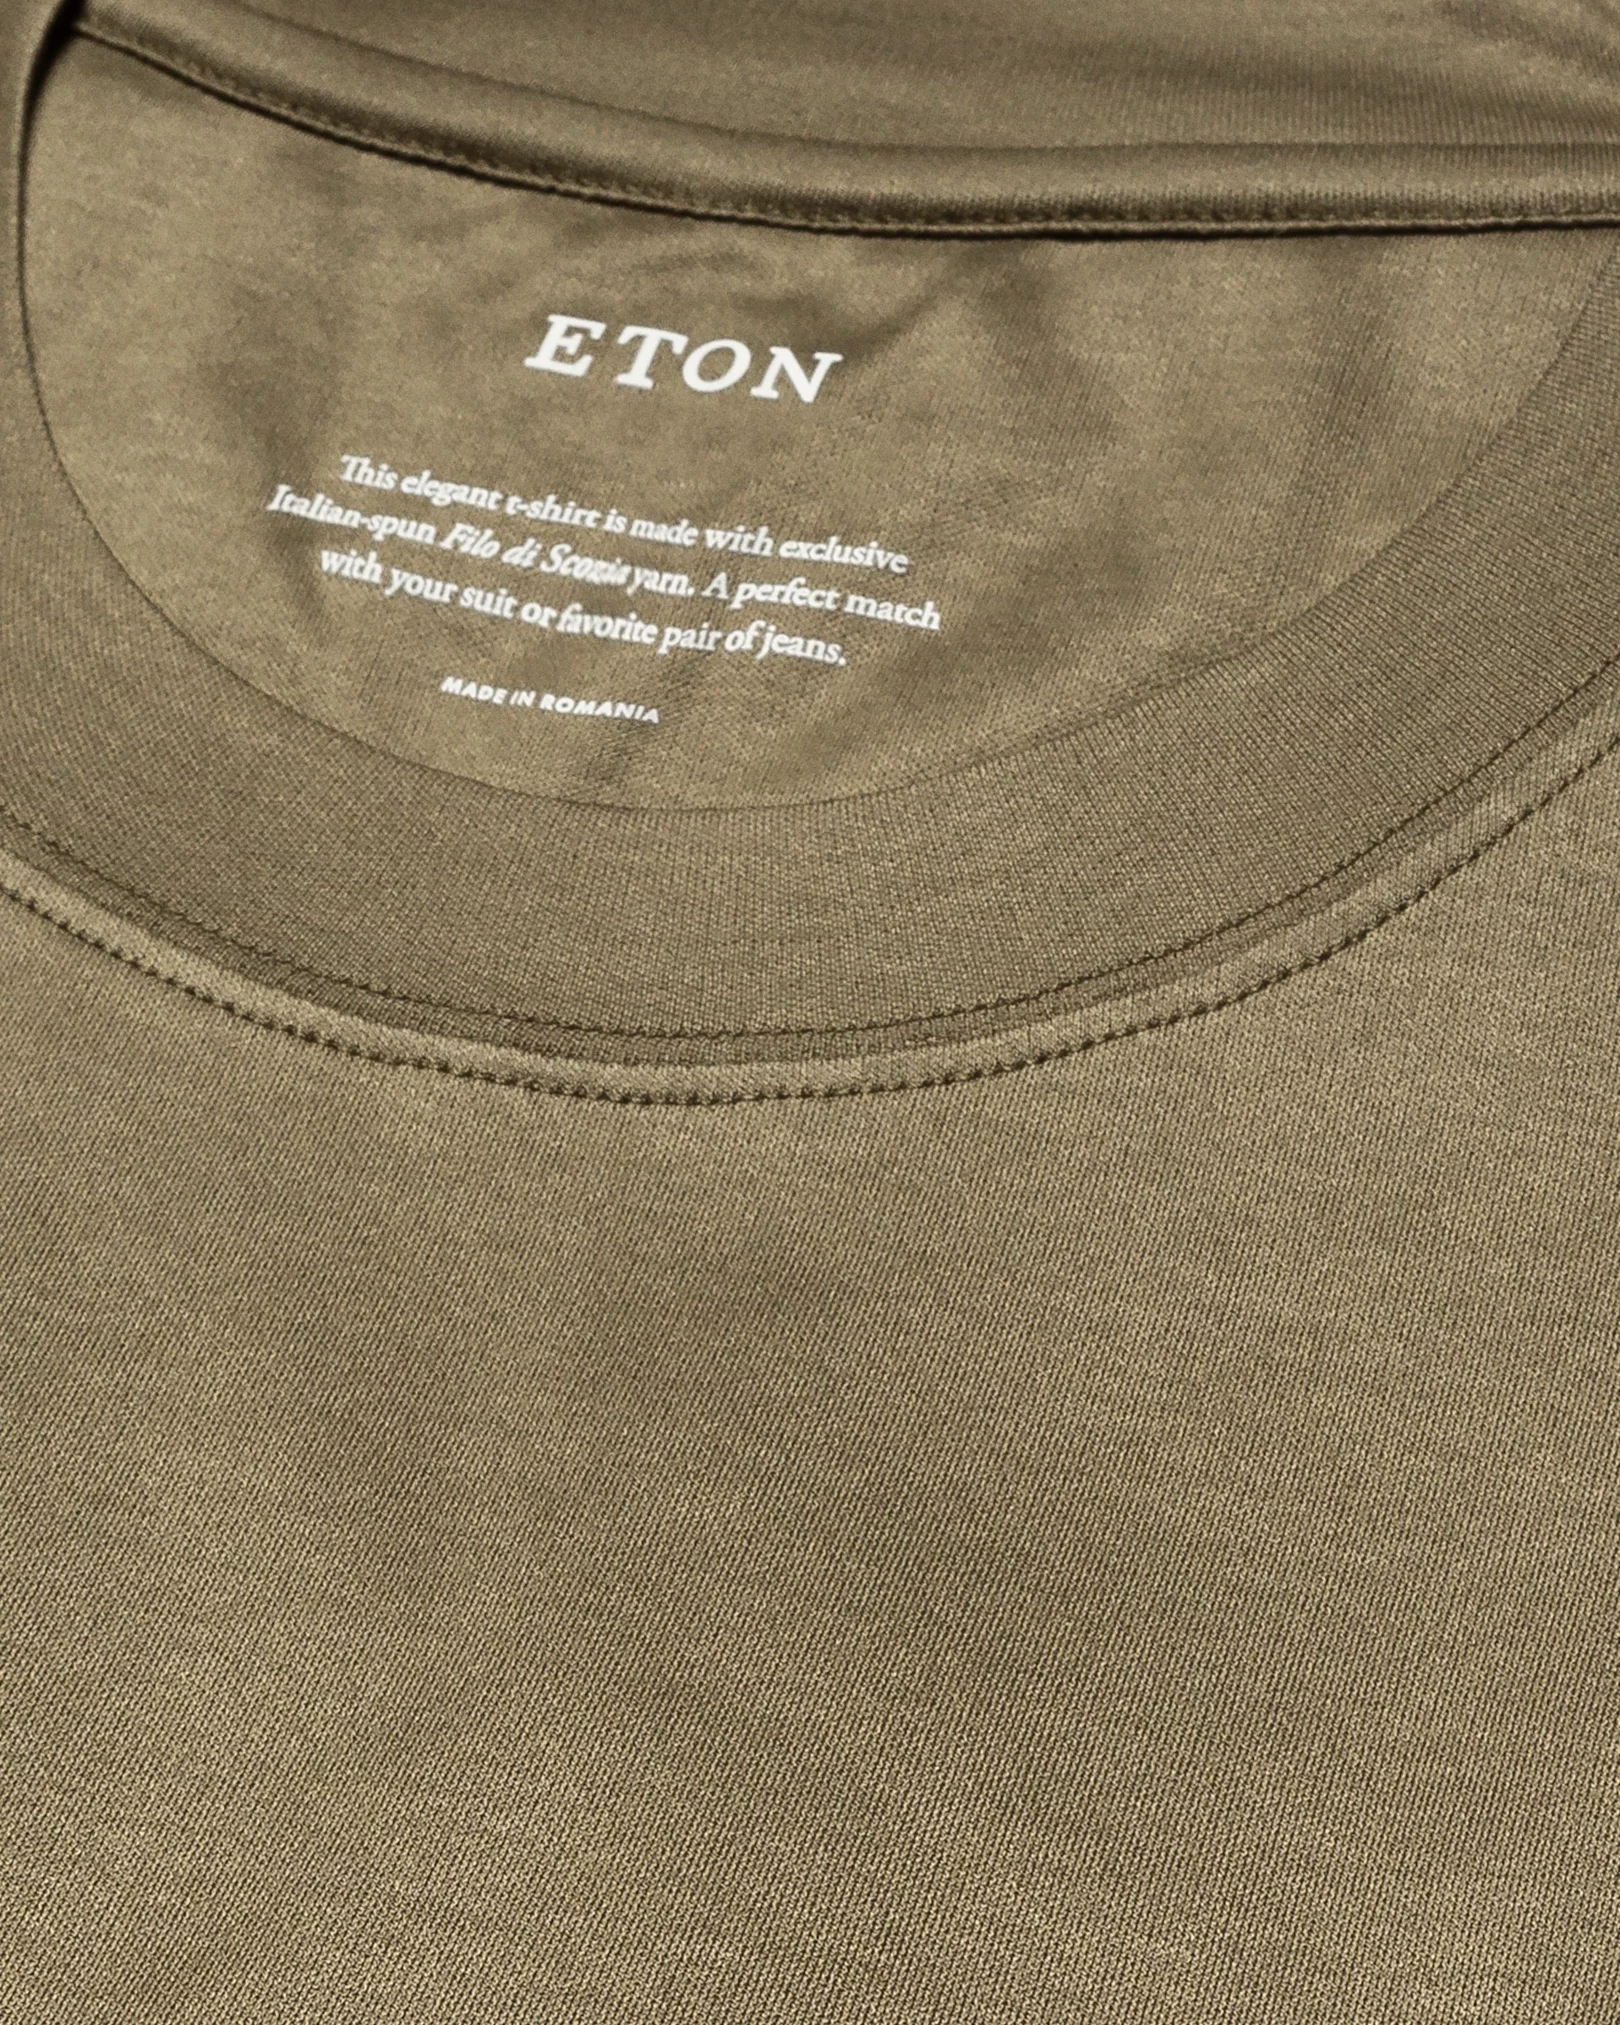 Eton - dark green jersey t shirt